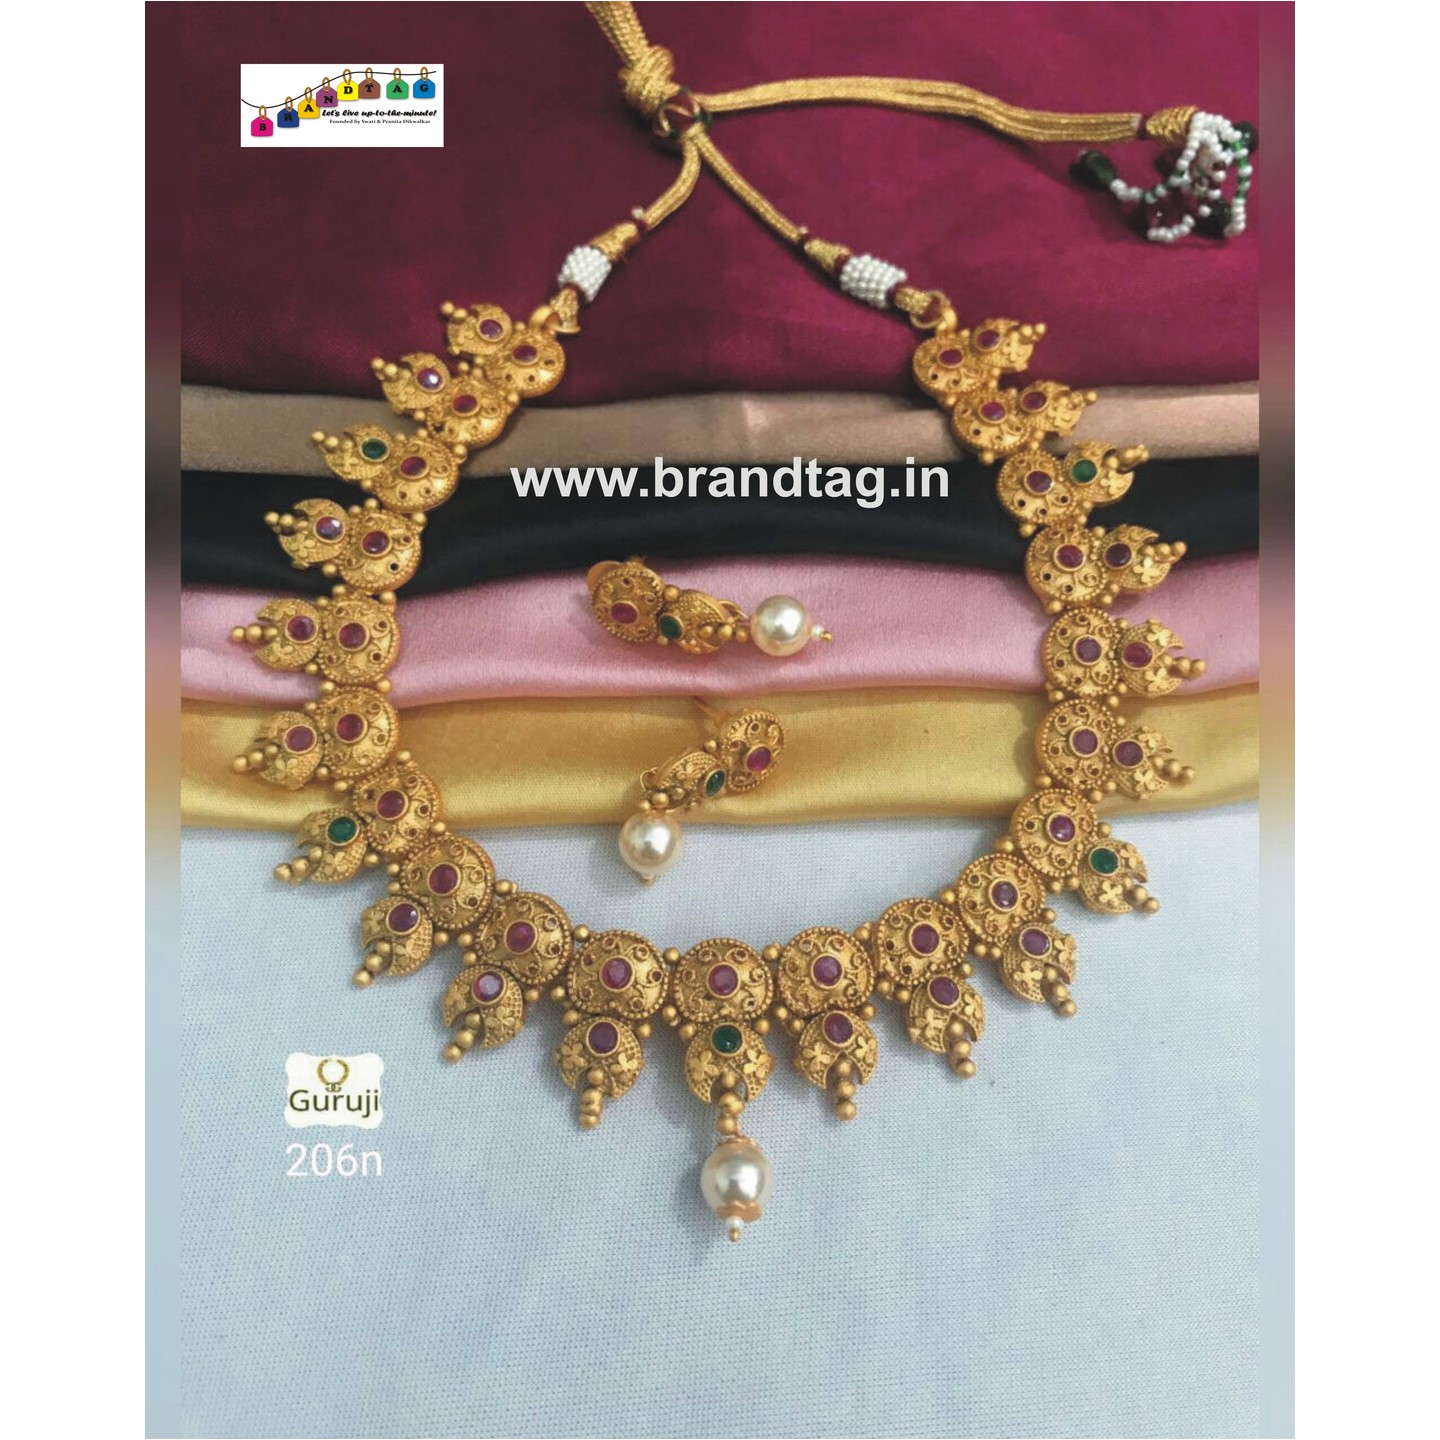 Exquisite Golden Heart Necklace set!! 